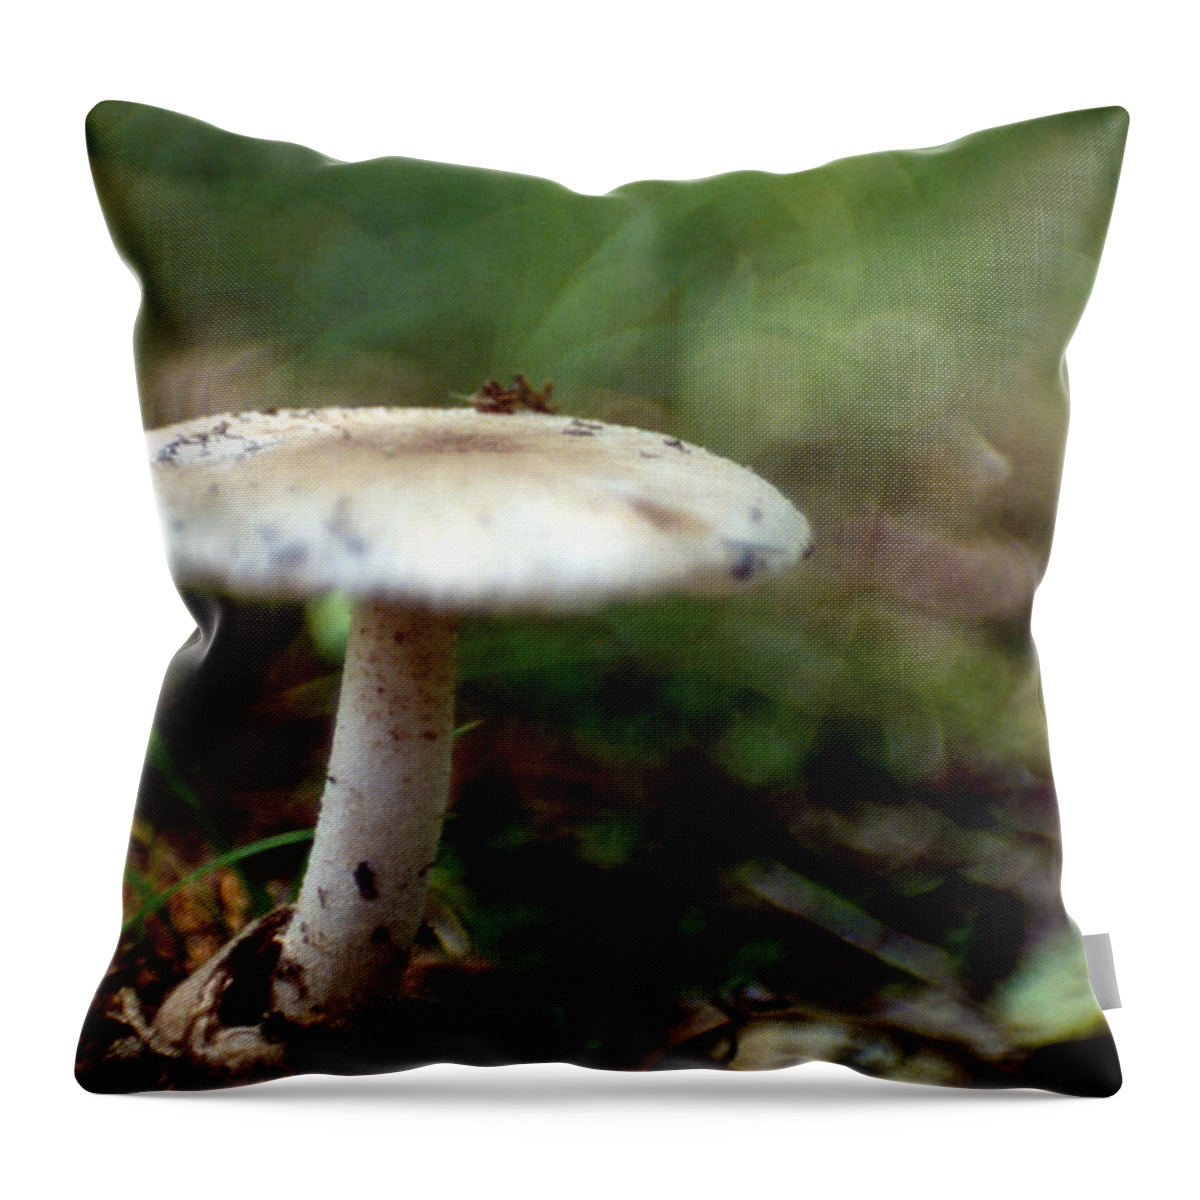 Nature Throw Pillow featuring the photograph Mushroom 2 by Sam Davis Johnson